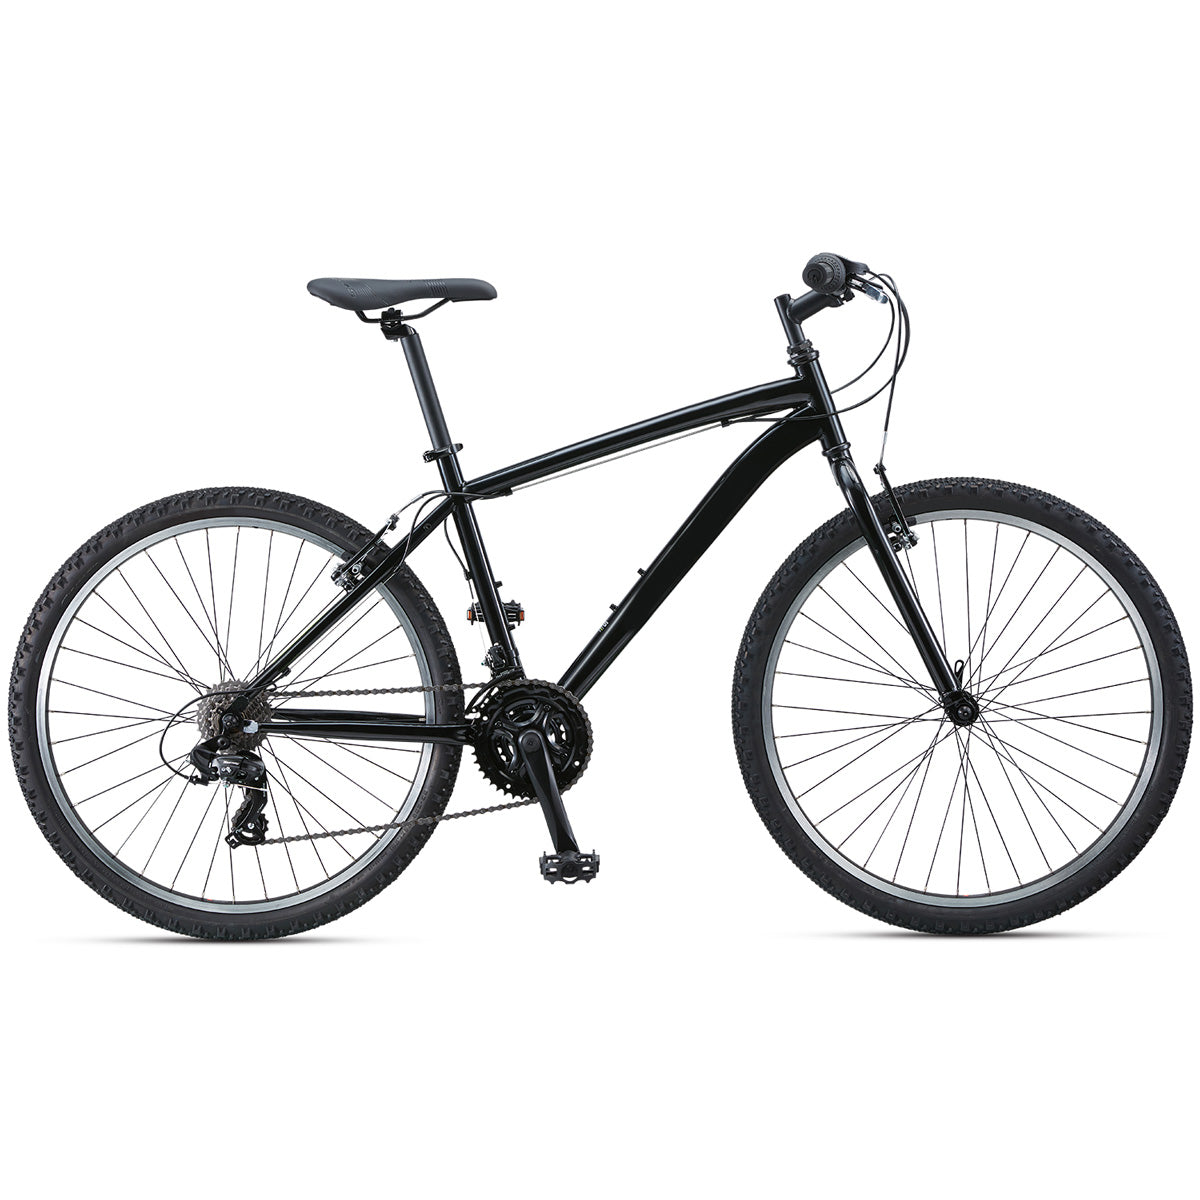 TXR 26" Hybrid Bike - Gloss Black (X Small, 13")